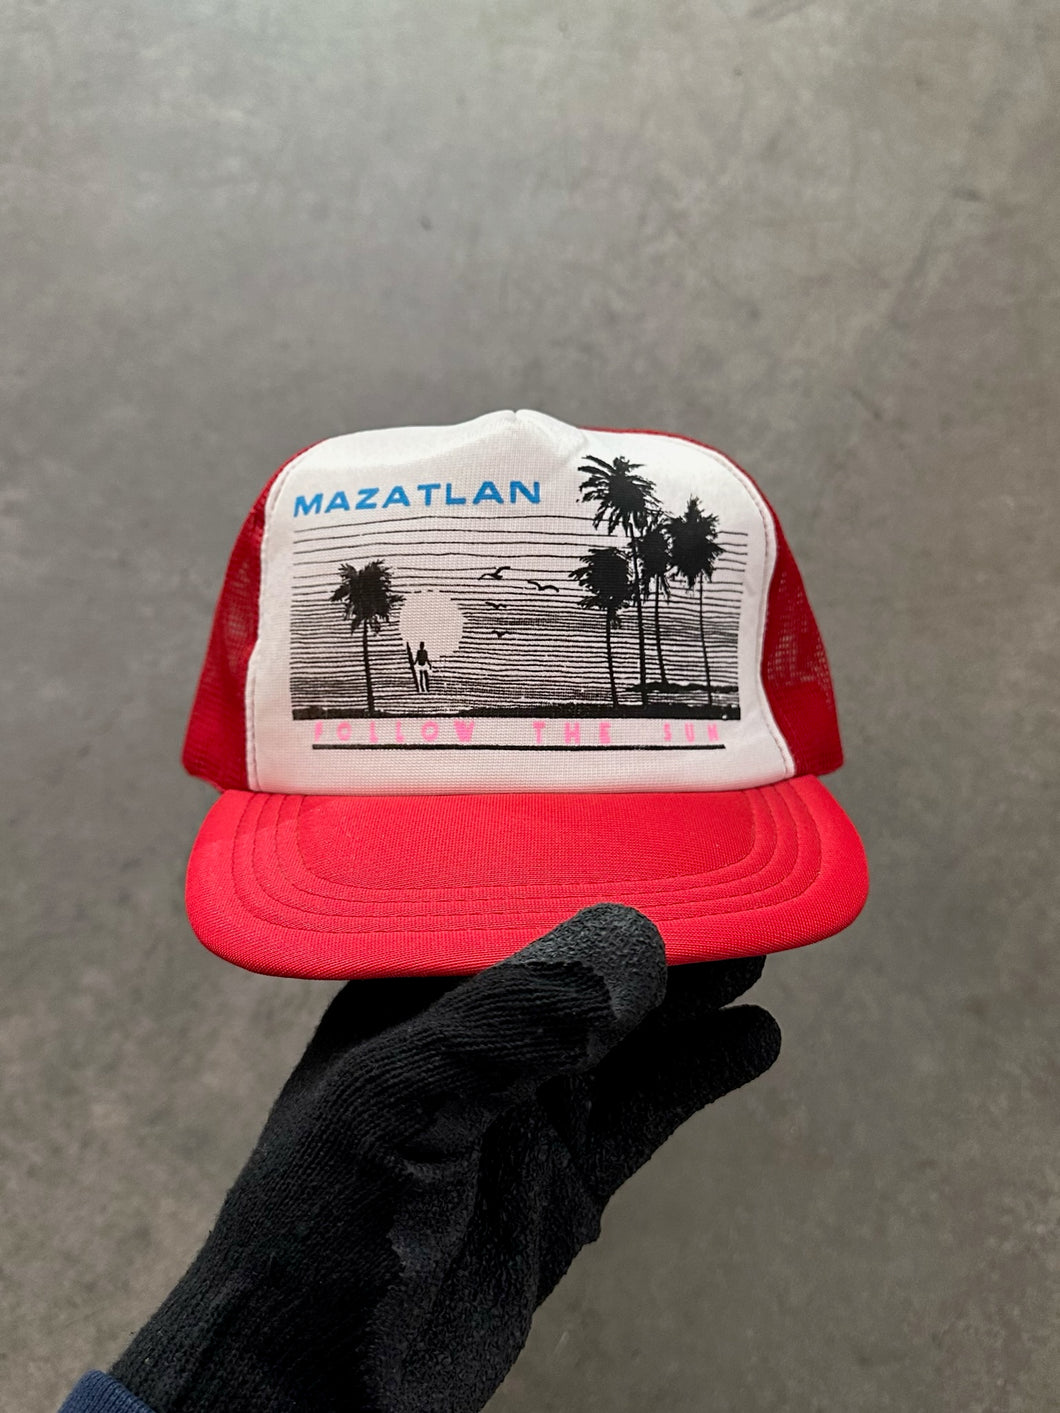 RED “MAZATLAN” TRUCKER HAT - 1990S